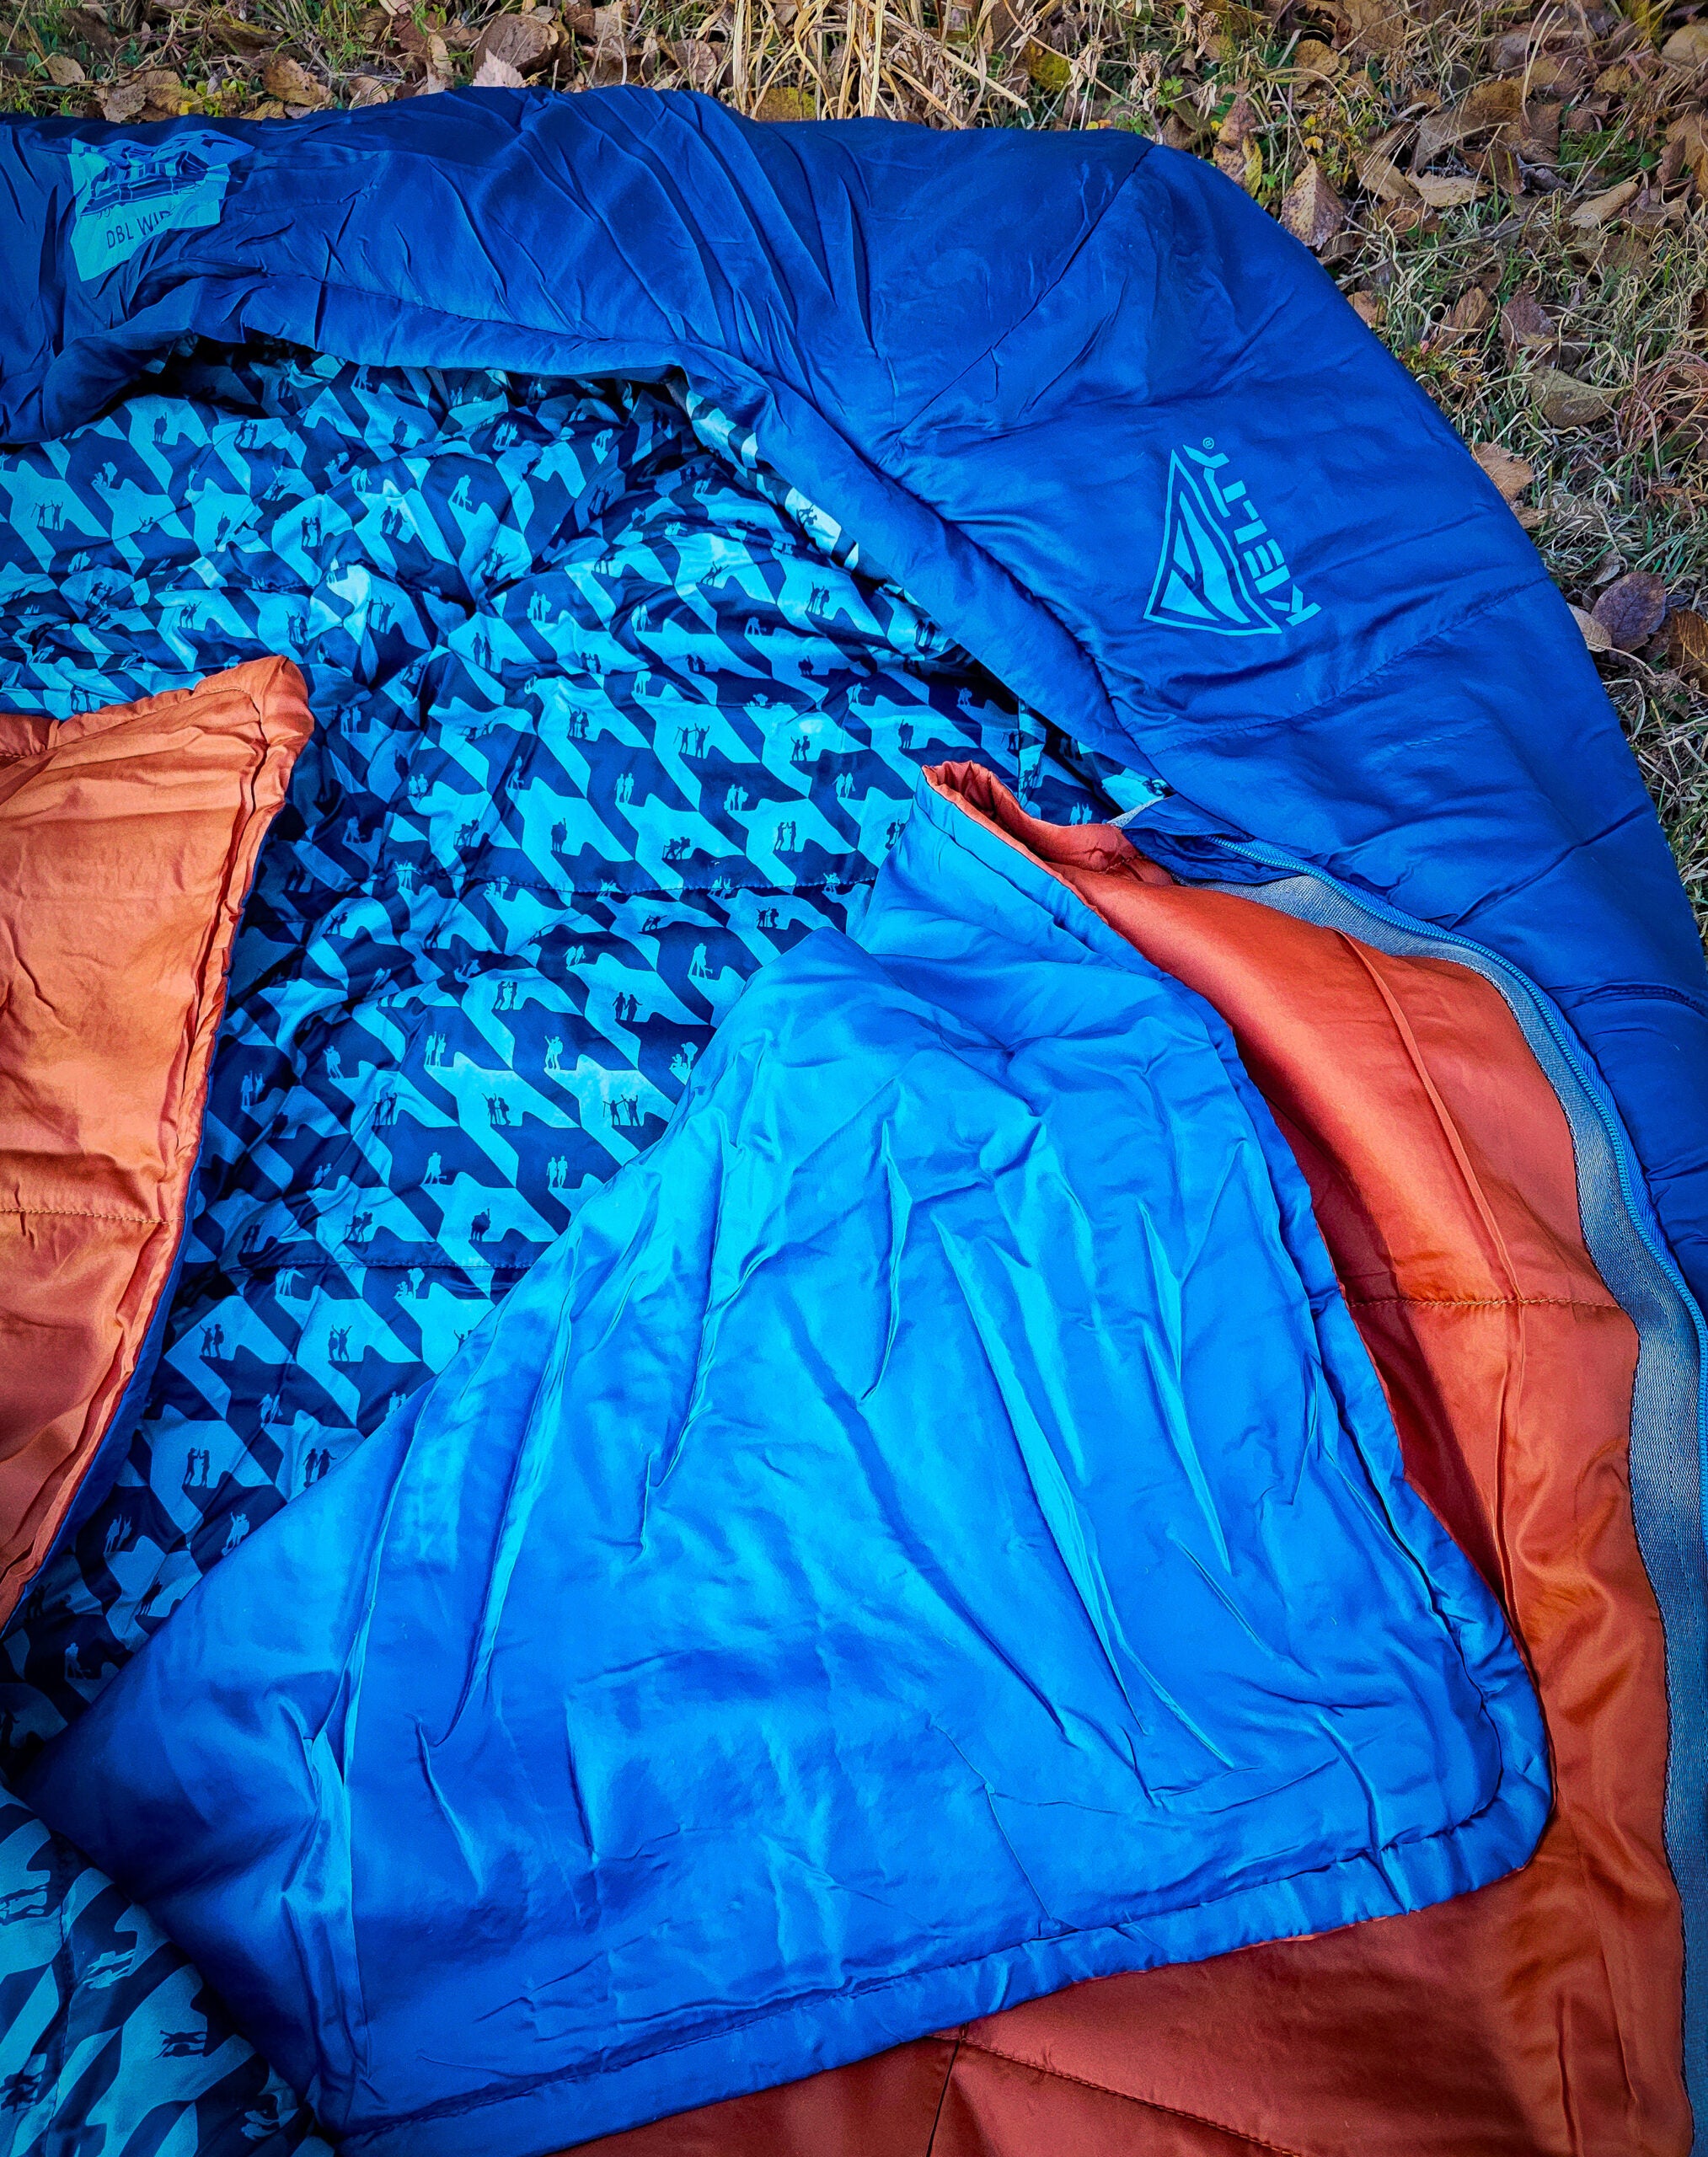 Kelty Tru.Comfort Doublewide Sleeping Bag spread out on ground